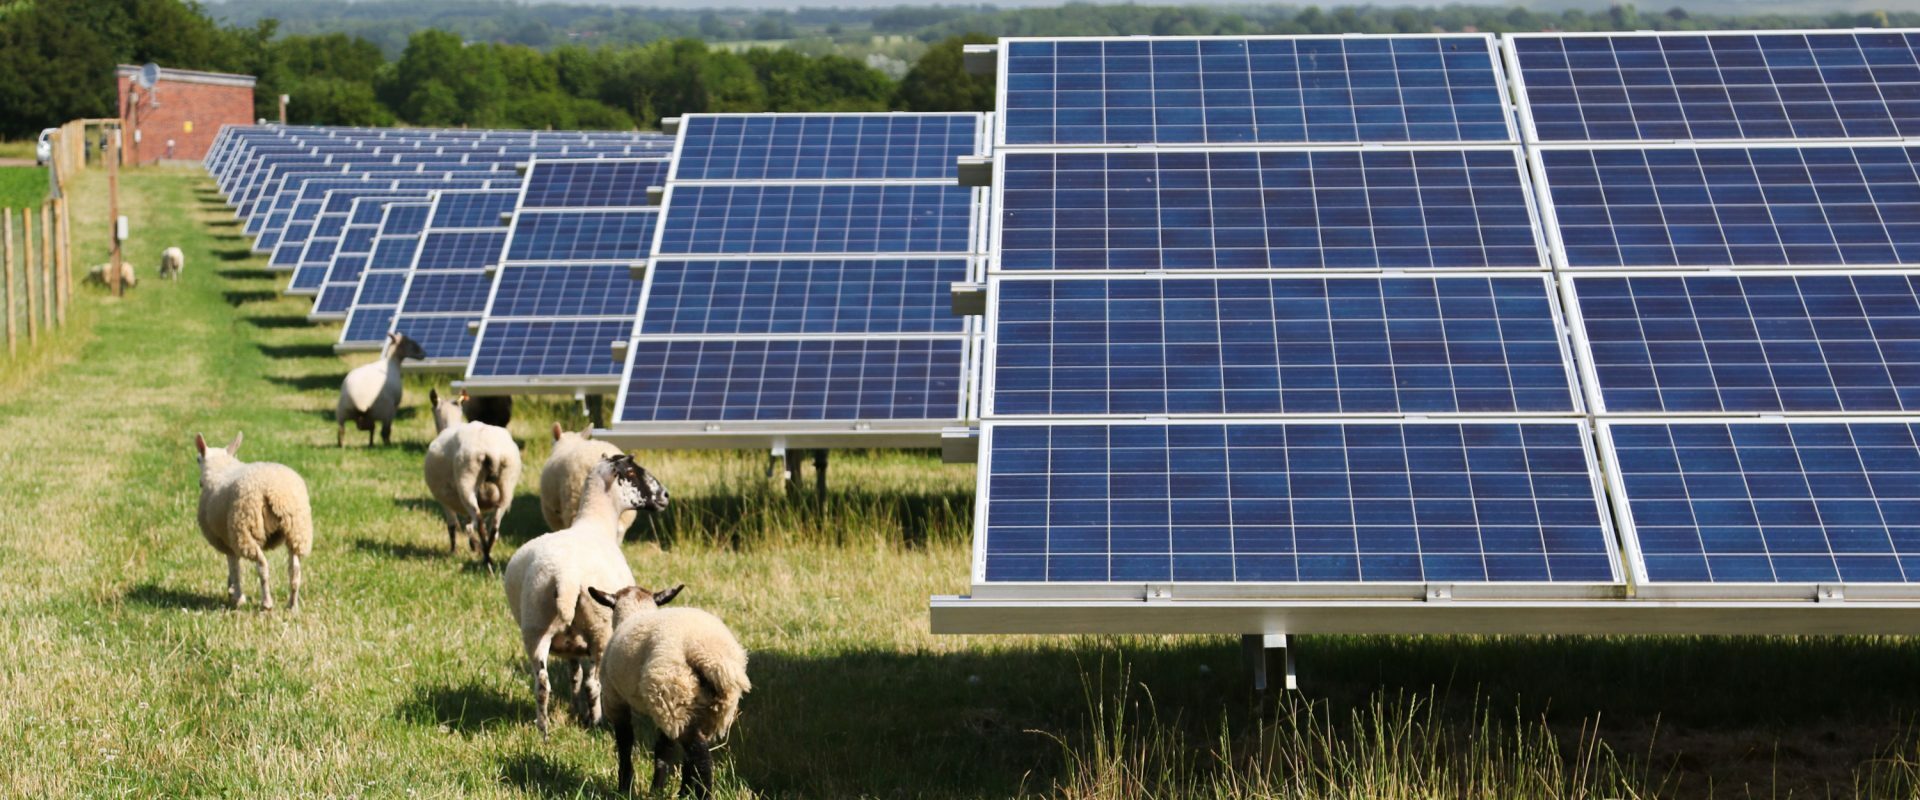 Sheep next to solar panels